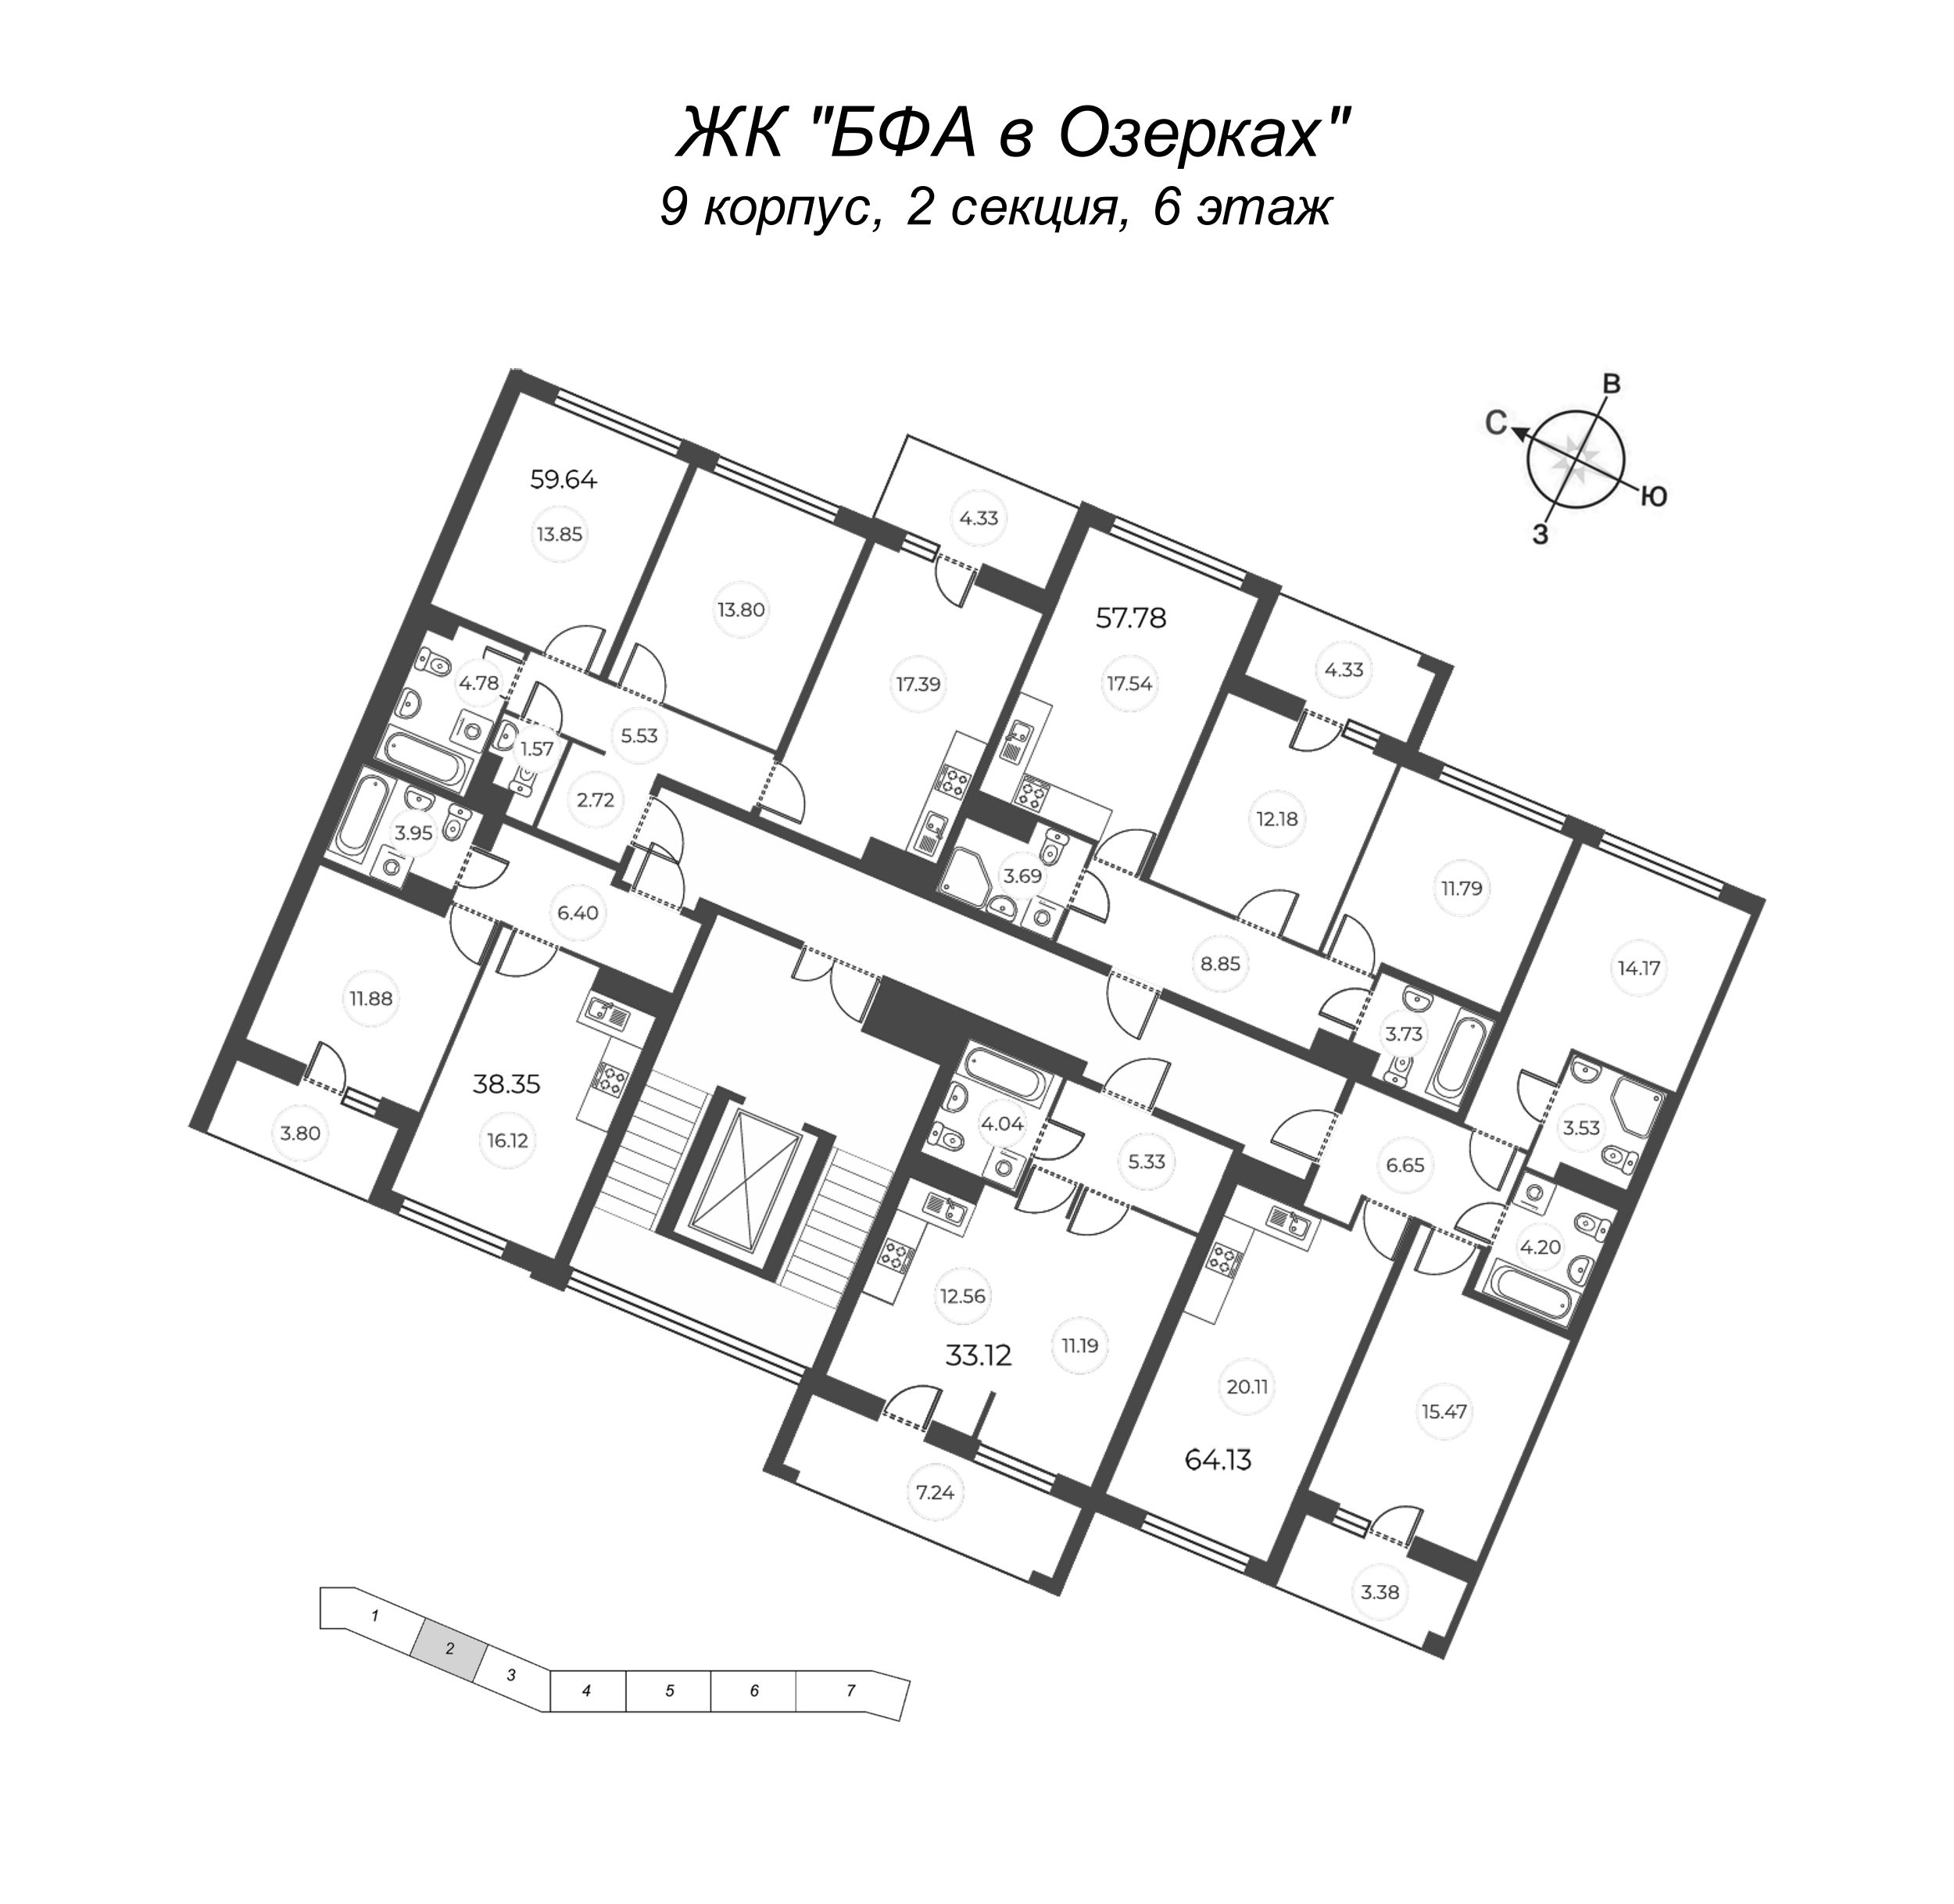 2-комнатная (Евро) квартира, 40.25 м² - планировка этажа